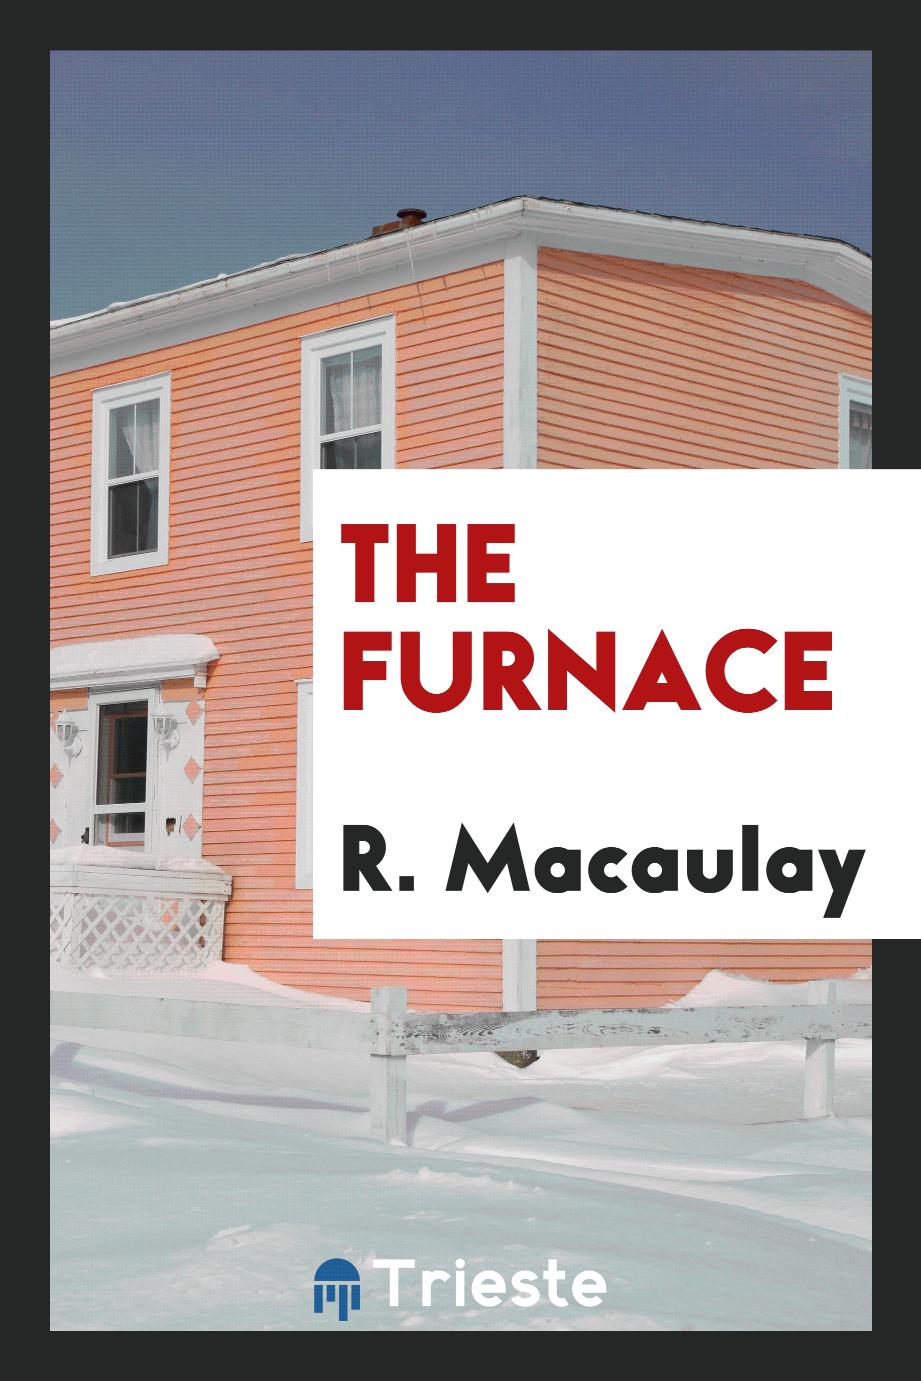 The furnace